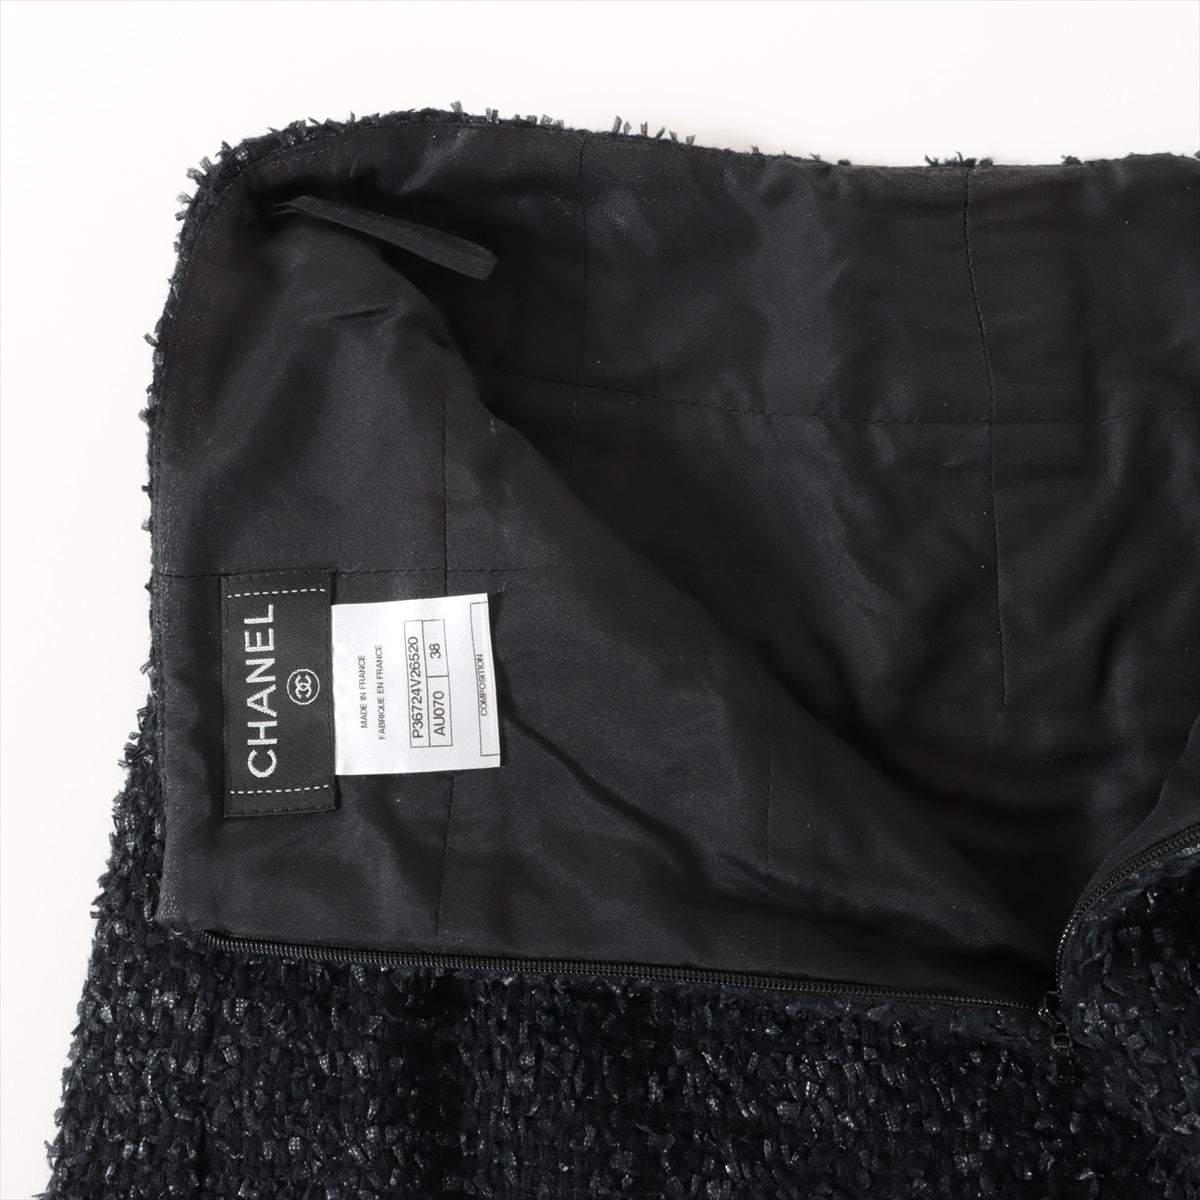 Chanel Coconut Button P36 Wool x Nylon Setup 36/38  Black Twid